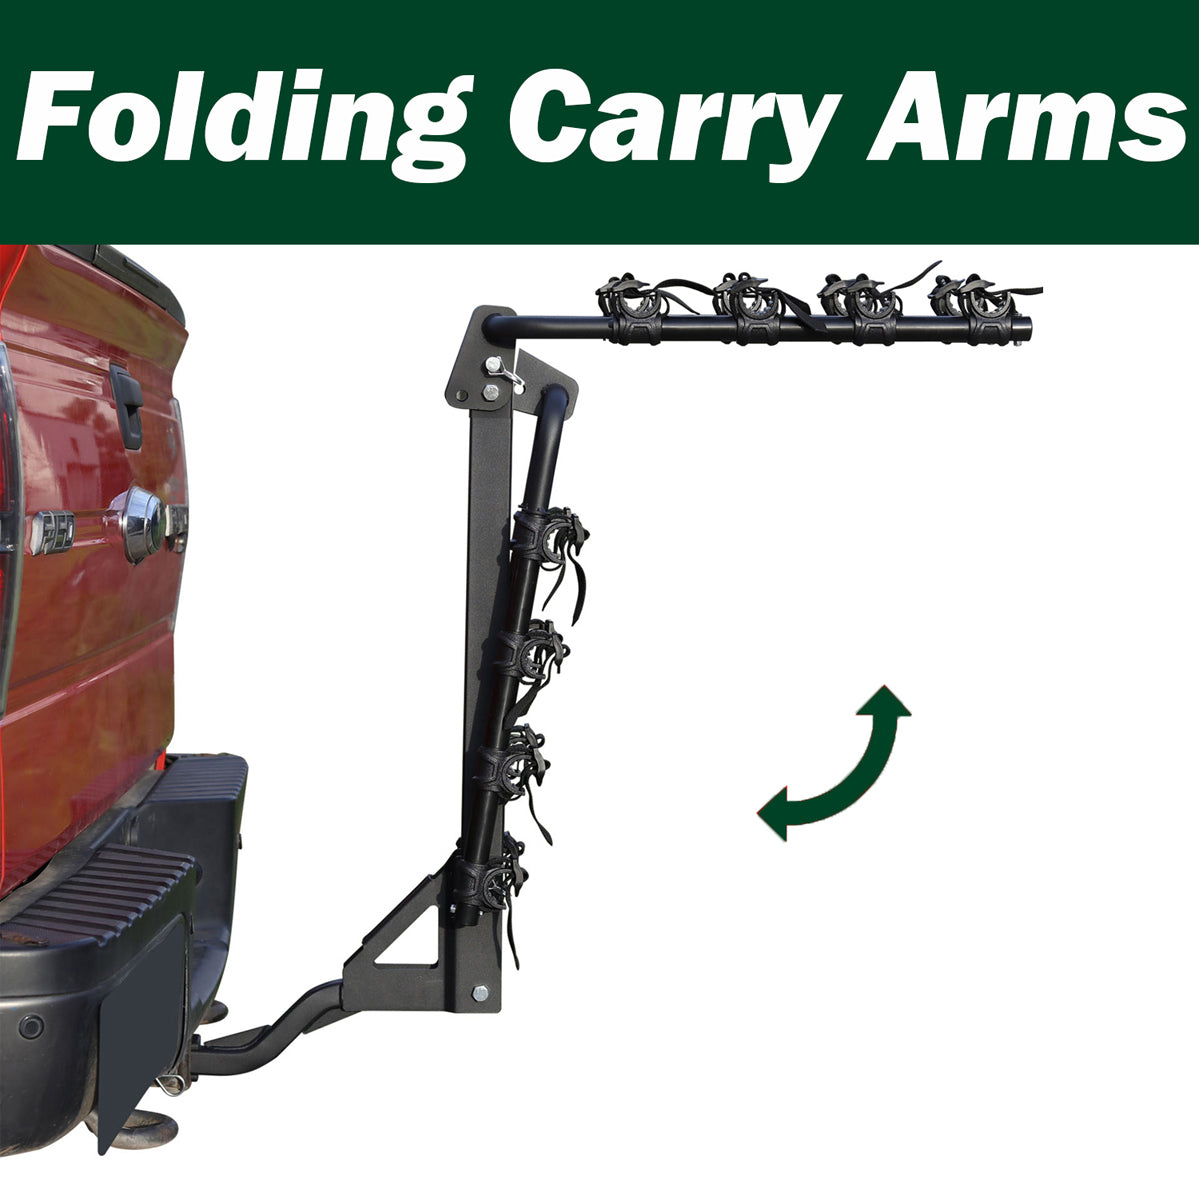 Folding Carry Arms